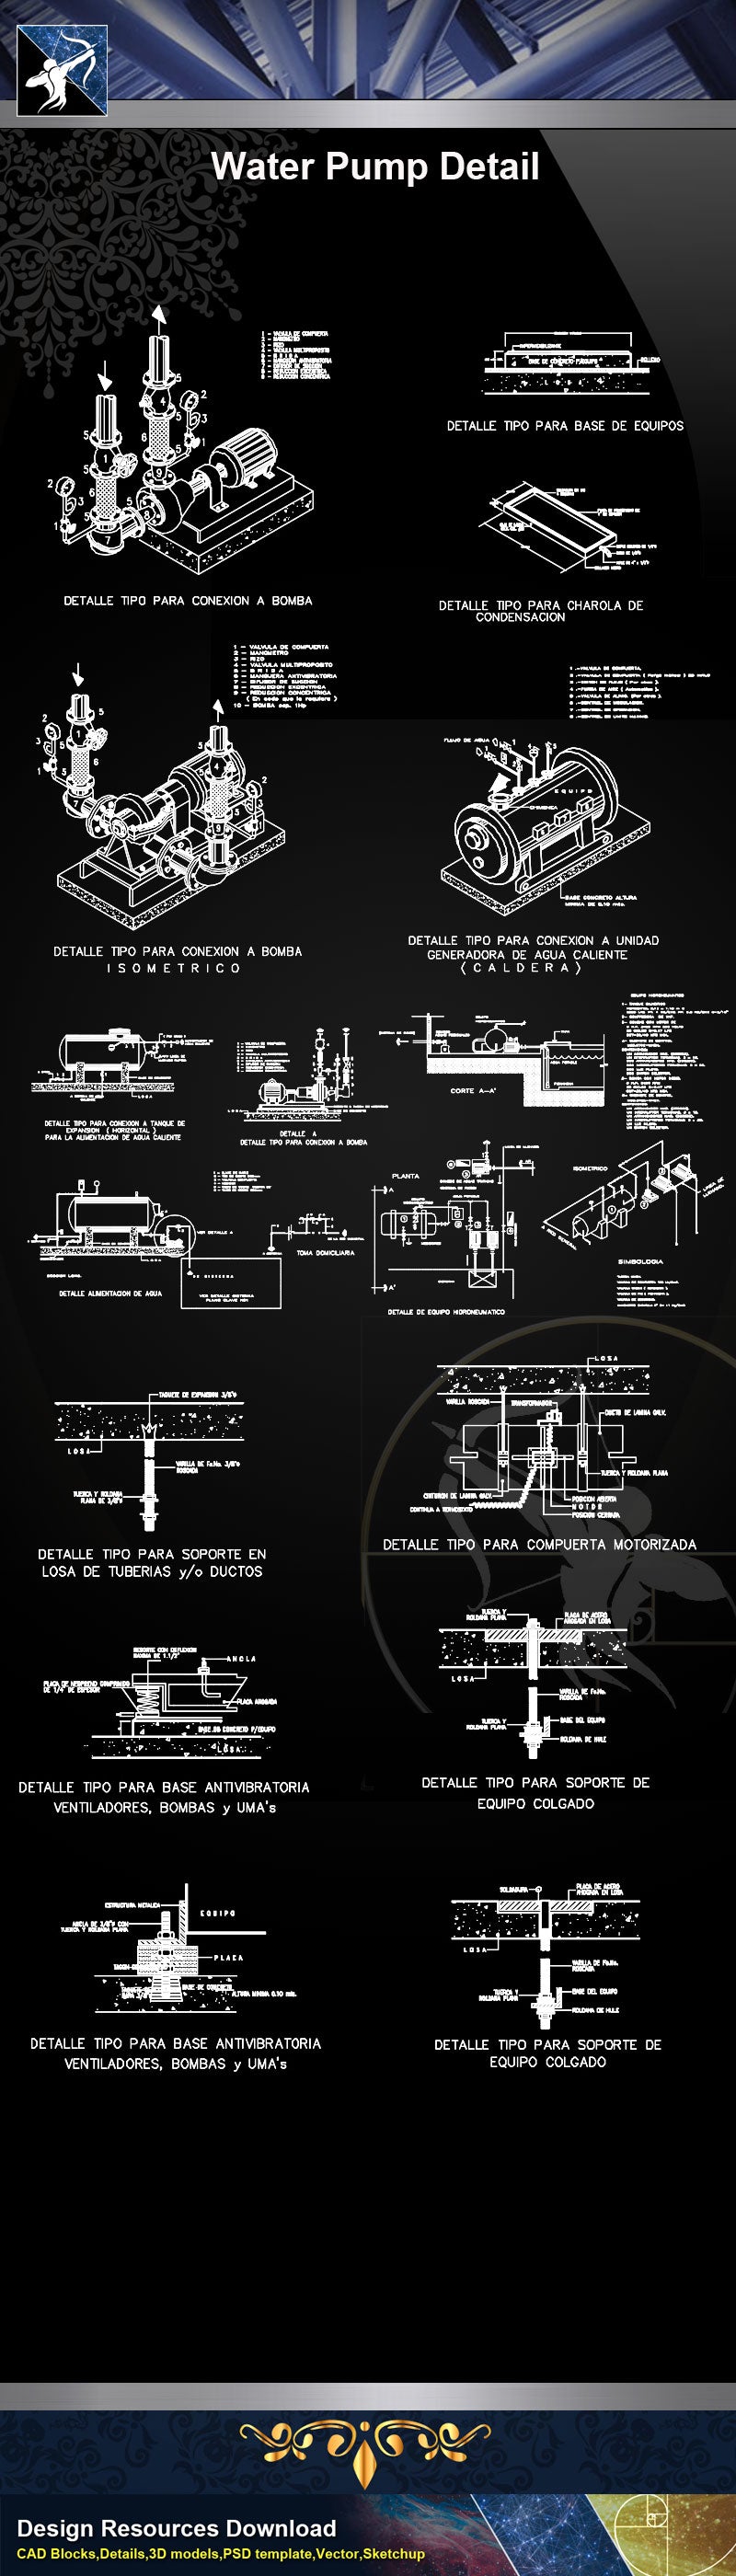 【Sanitations Details】 Water Pump Detail